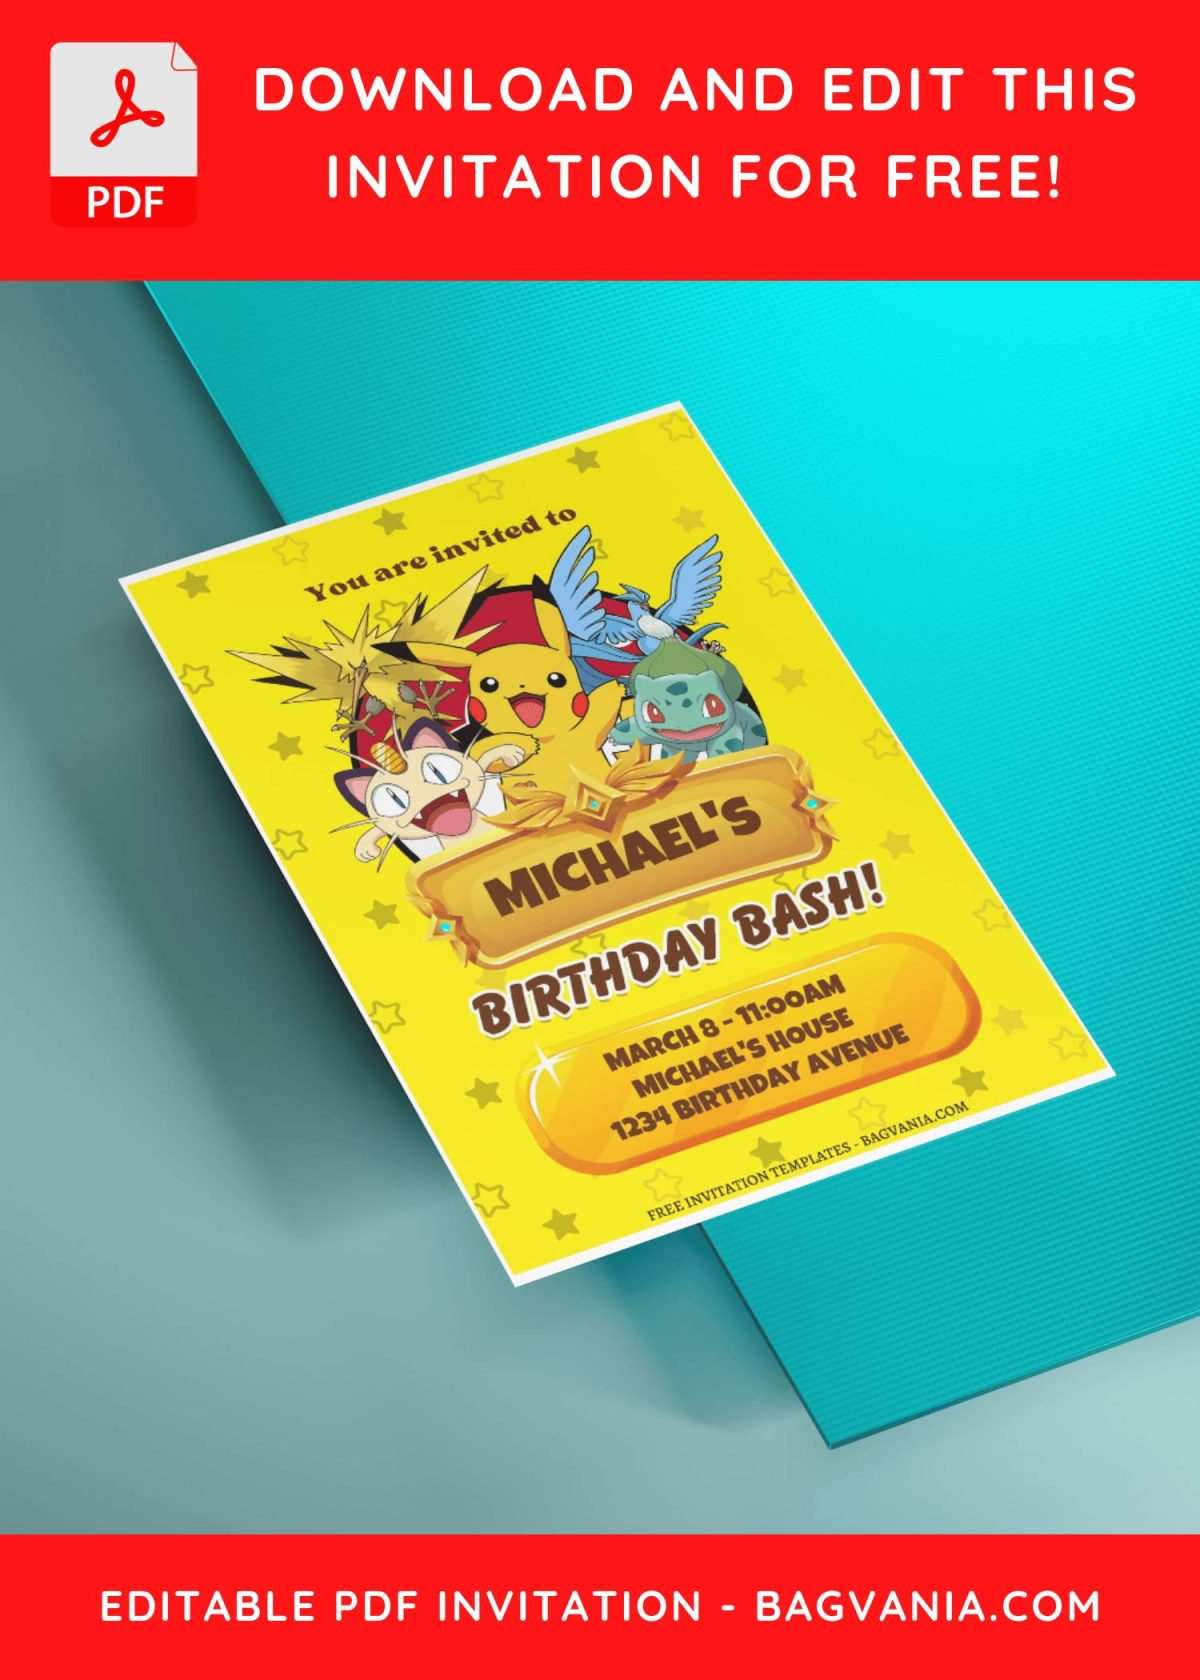 (Free Editable PDF) A Galaxy Of Fun Pokemon Themed Birthday Invitation Templates with Bulbasaur